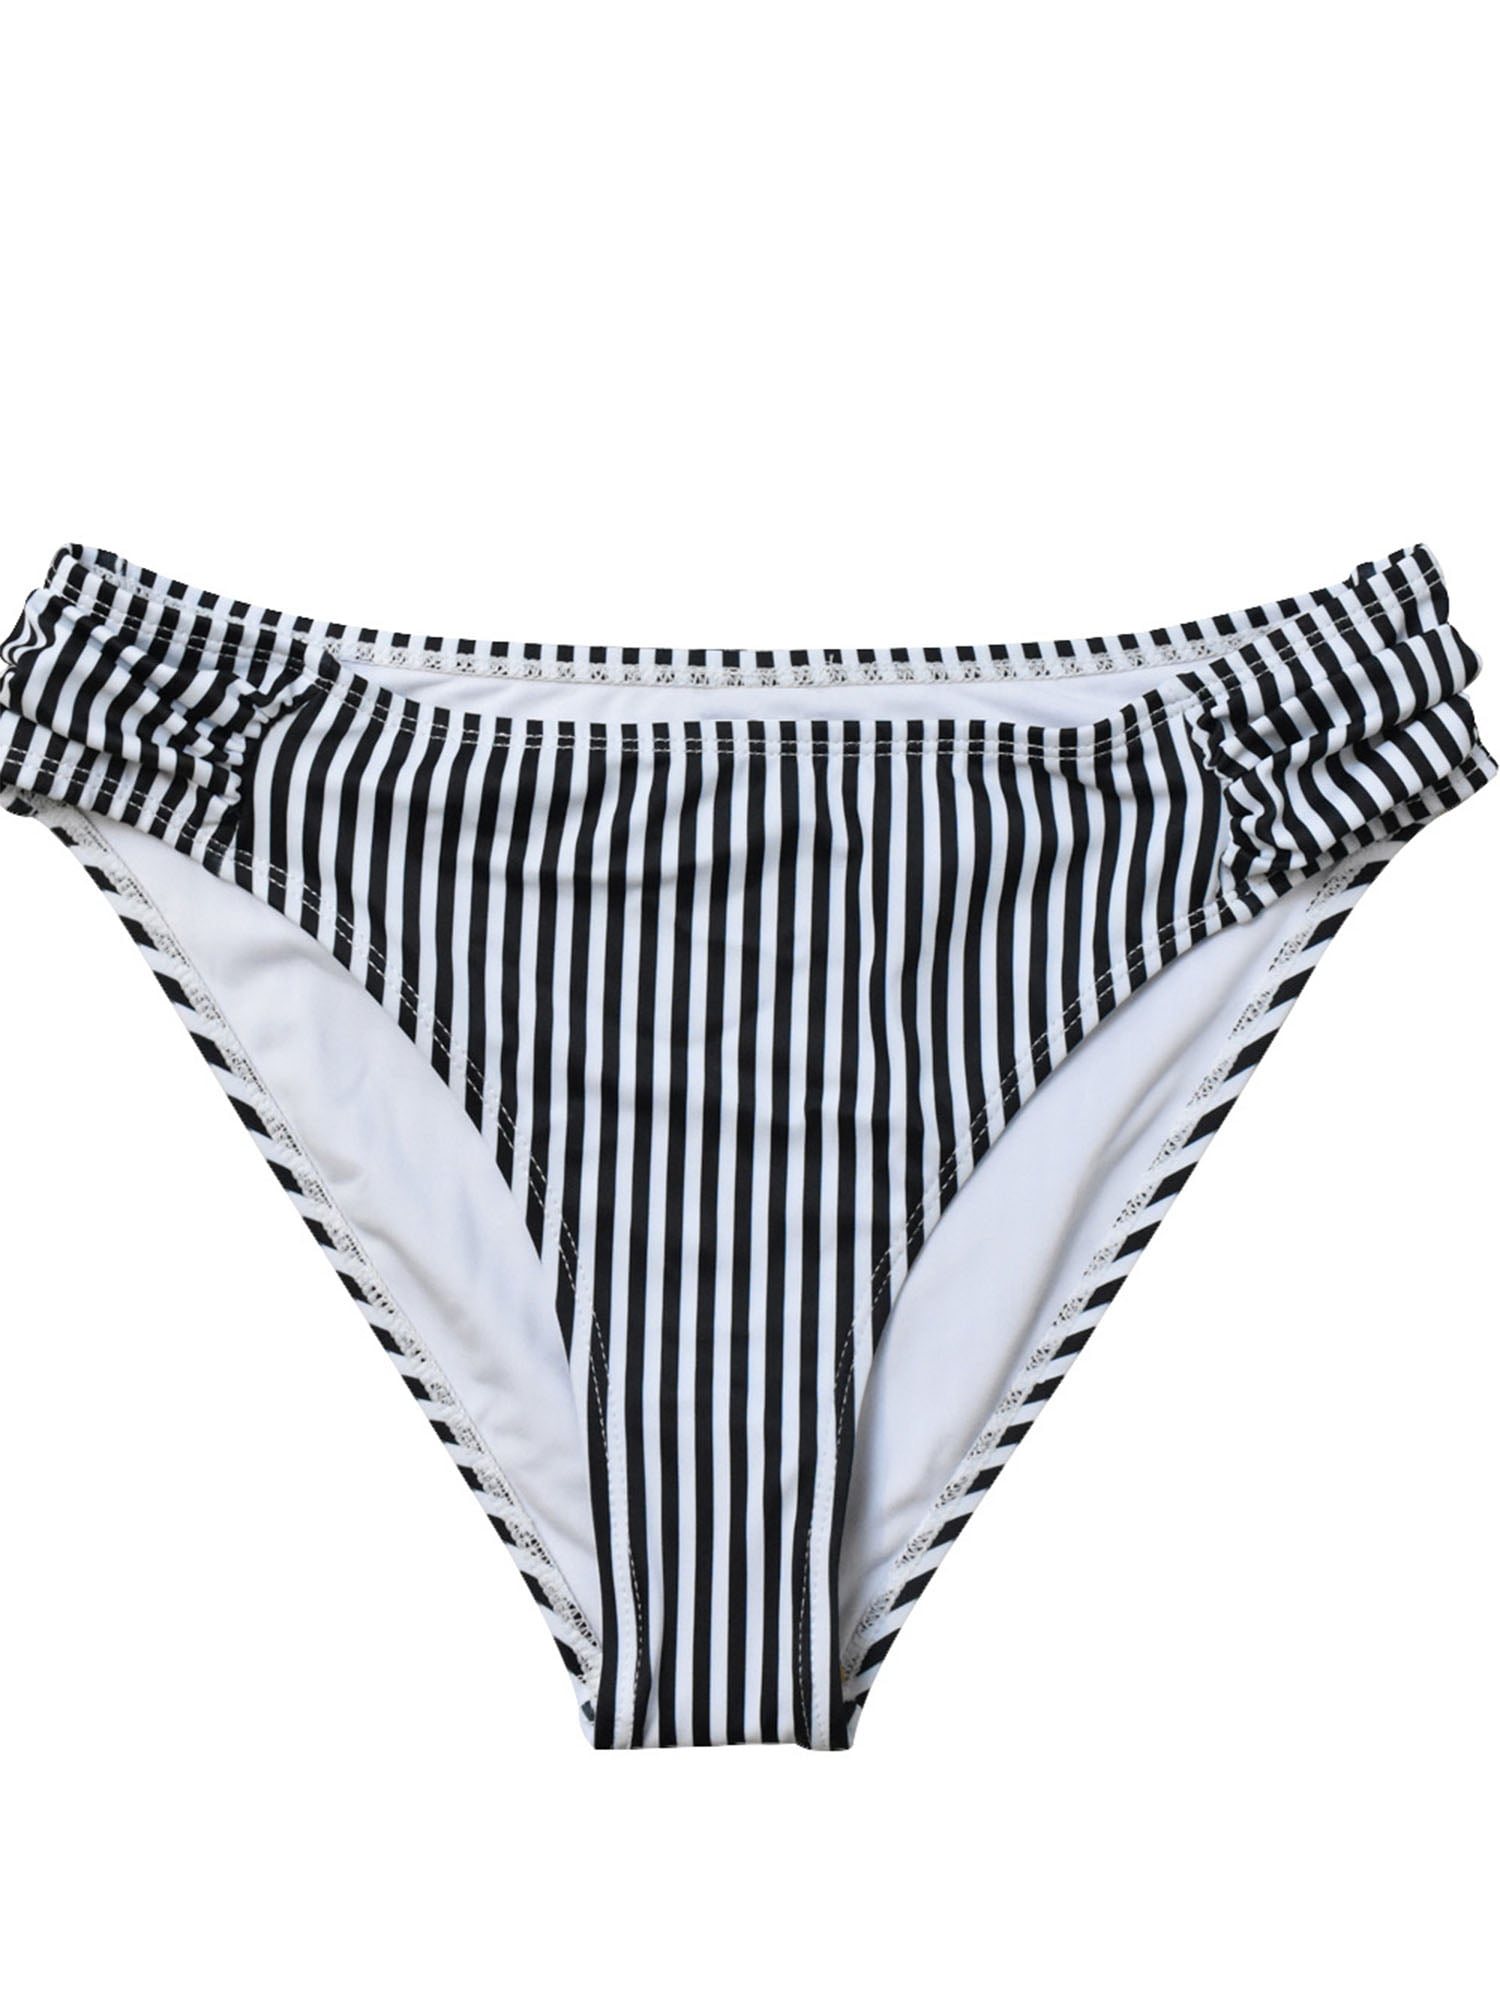 Black Lace Marine Shorts Combined Bikini Bottom